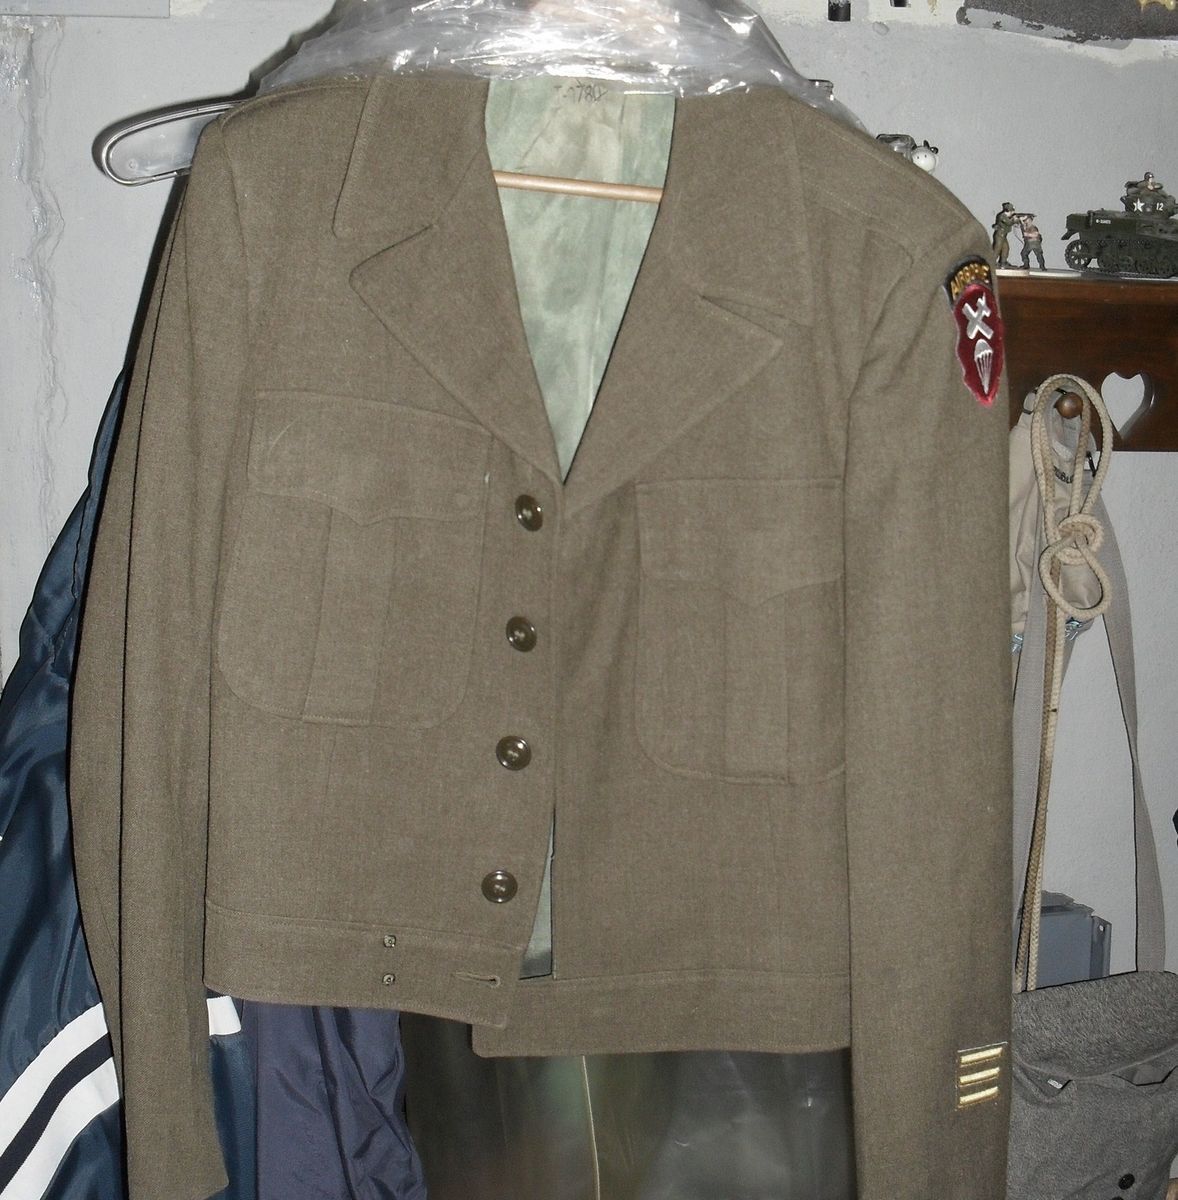 GI OD Wool Uniform IKE Jacket Size 38R, with Airborne Patch